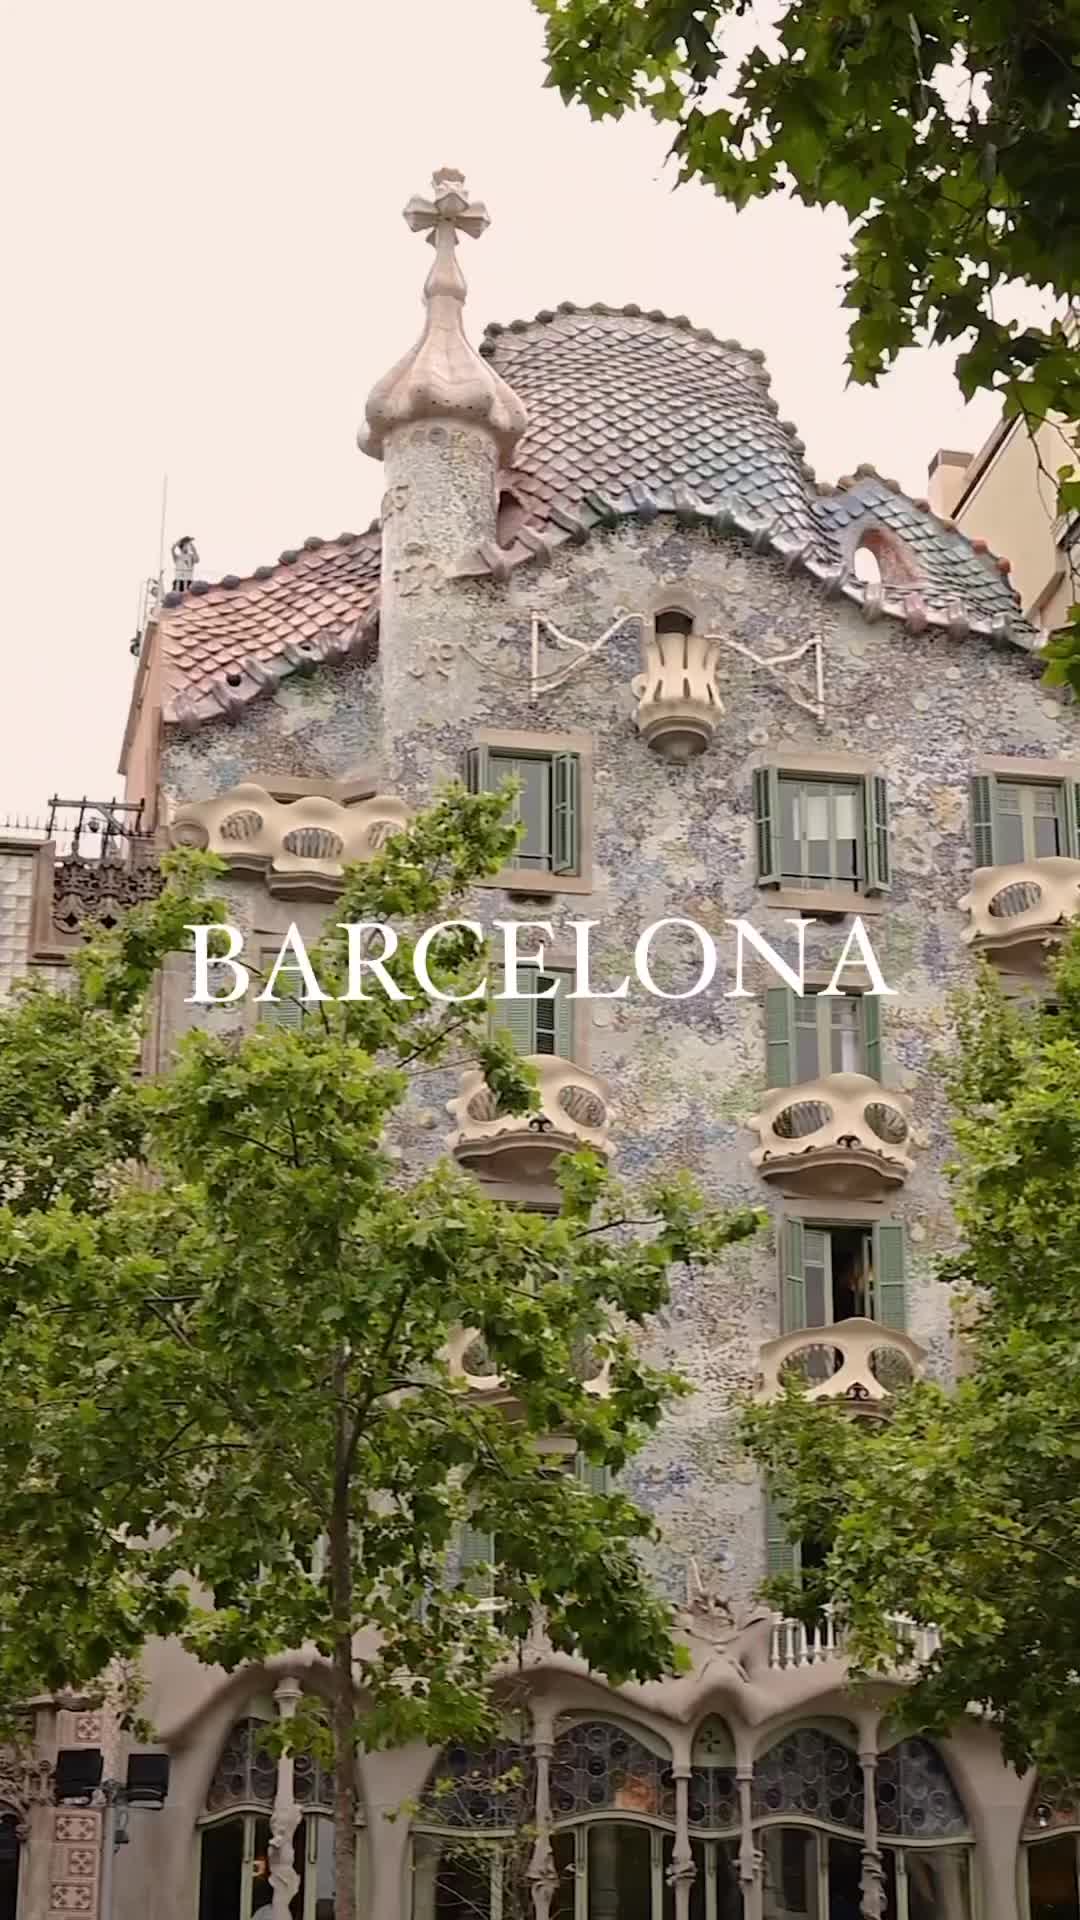 Will you visit Barcelona this summer? 💙☀️
•
•
•
•
#spain🇪🇸 #thatsdarling #españa #map_of_europe #visitspain #theprettycities #barcelona #culturetrip #cntraveler #travellingthroughtheworld #españa🇪🇸 #barcelonacity #barcelona🇪🇸 #passionpassport #barcelonagram #italiainfoto #sagradafamilia #viajerosporelmundo #tlpicks #beautifuldestinations #viajesporelmundo #spaintravel #spagna🇪🇸 #theweekoninstagram #iamatraveler #barcellona #spain_vacations